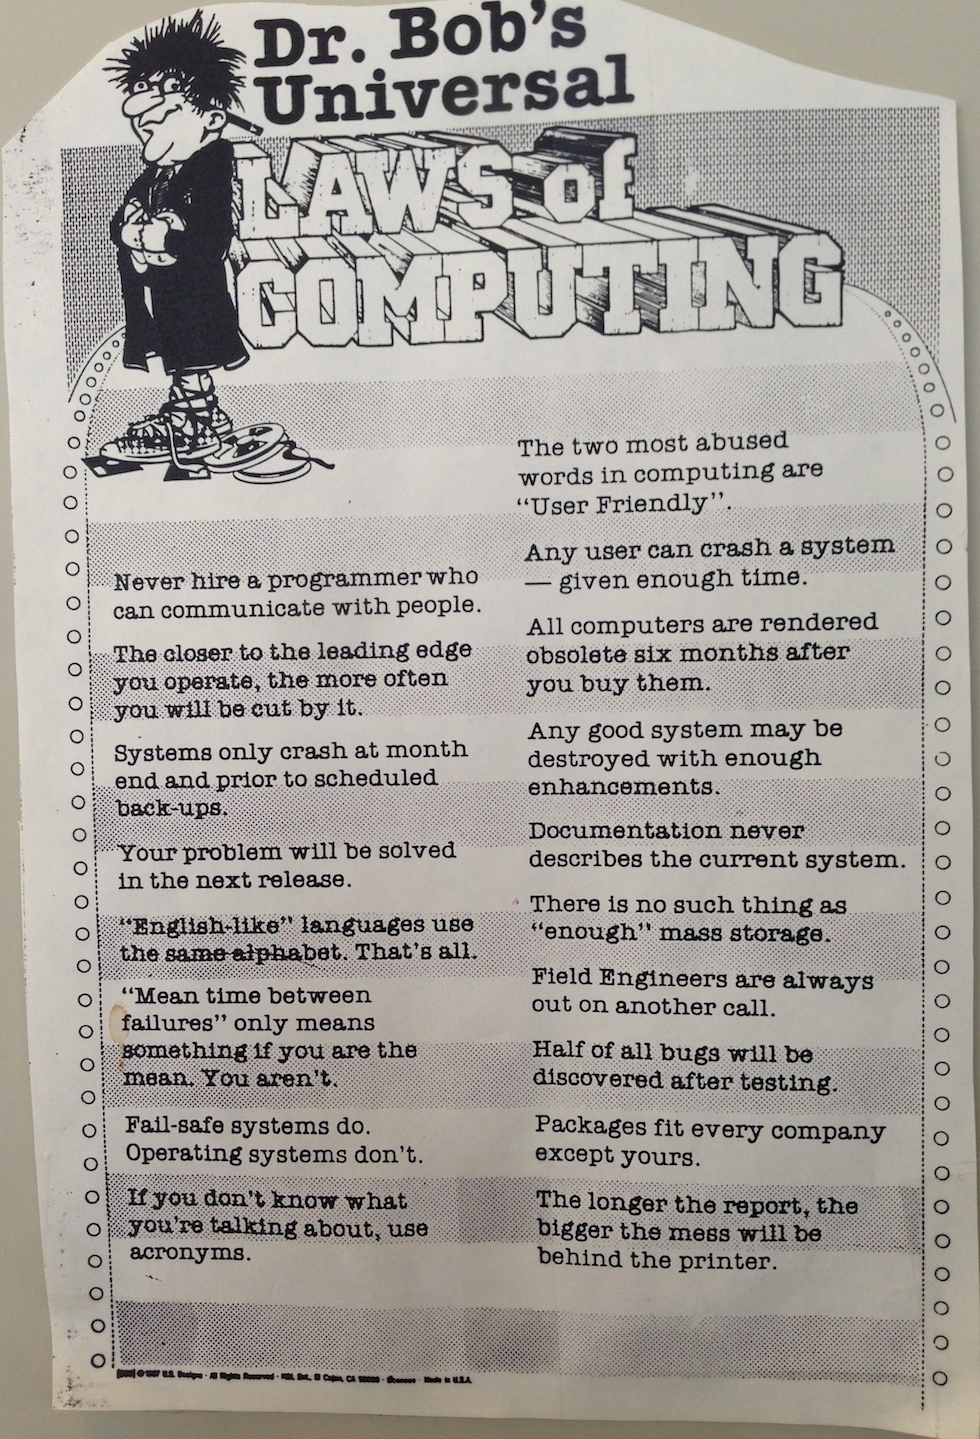 dr bob's univeral laws of computing, lol, geek humour